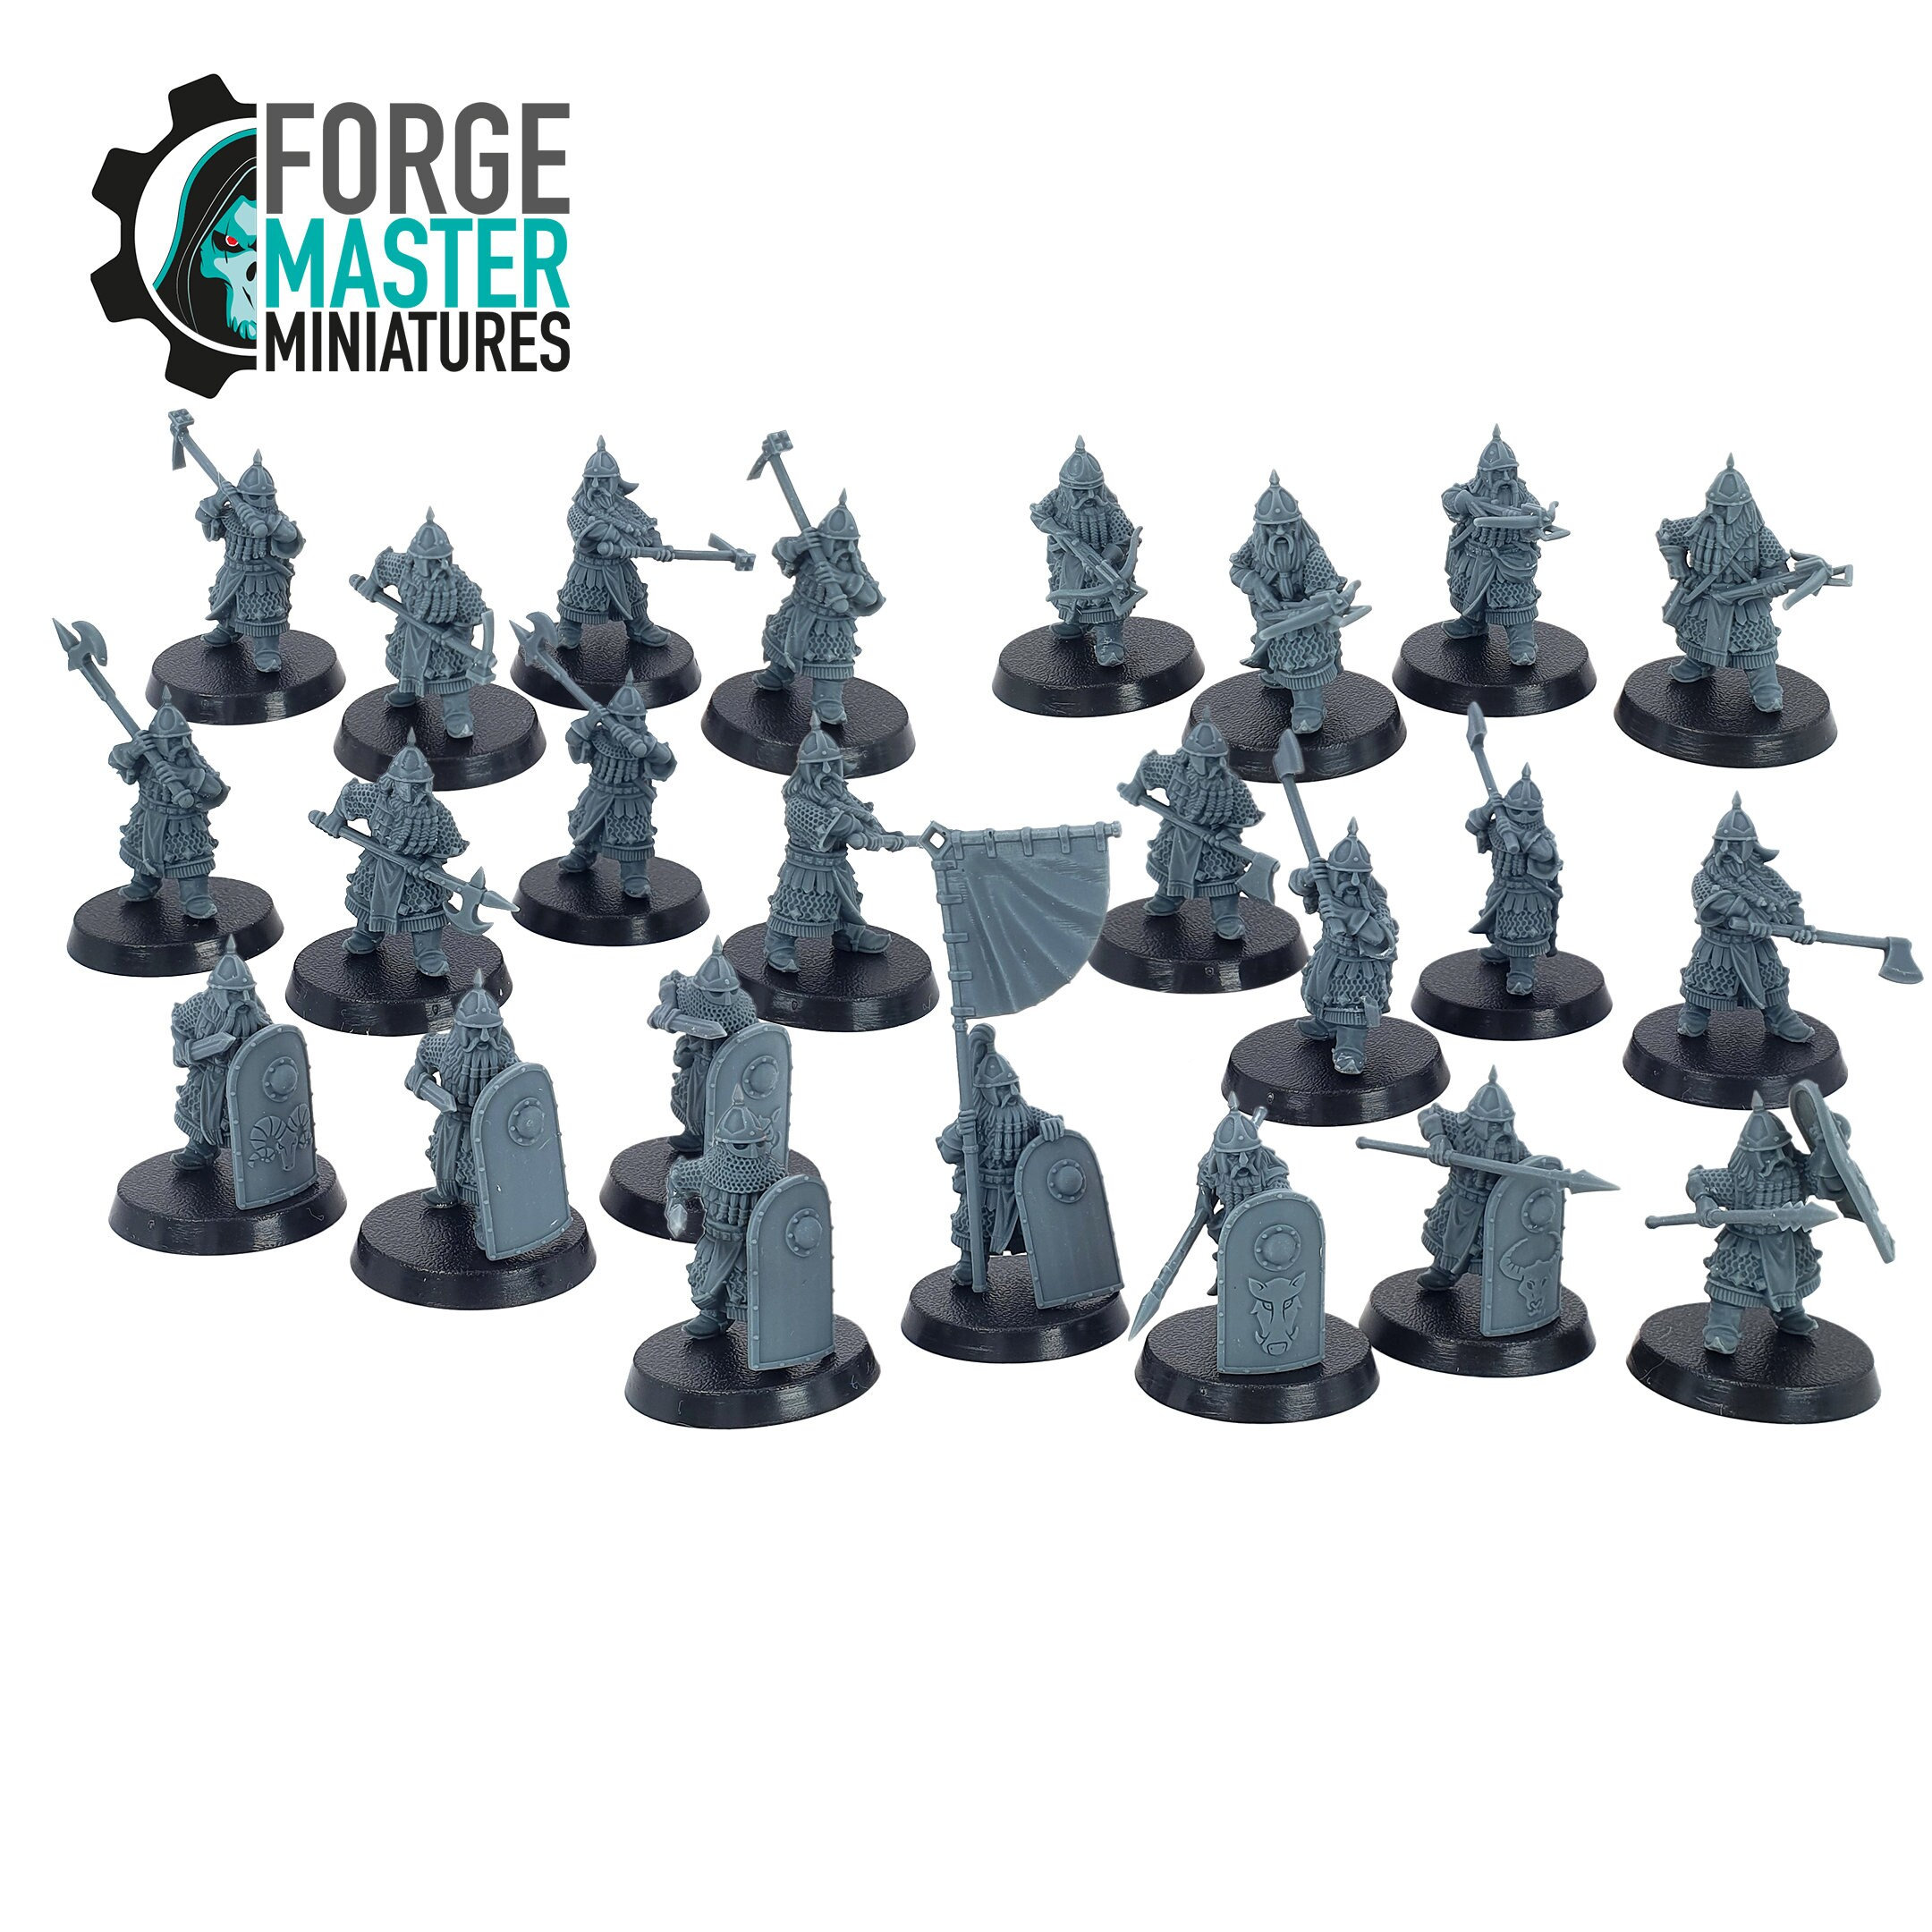 Eastern Dwarves Army Bundle wargaming miniatures by Medbury Miniatures 3D printed by Forgemaster Miniatures